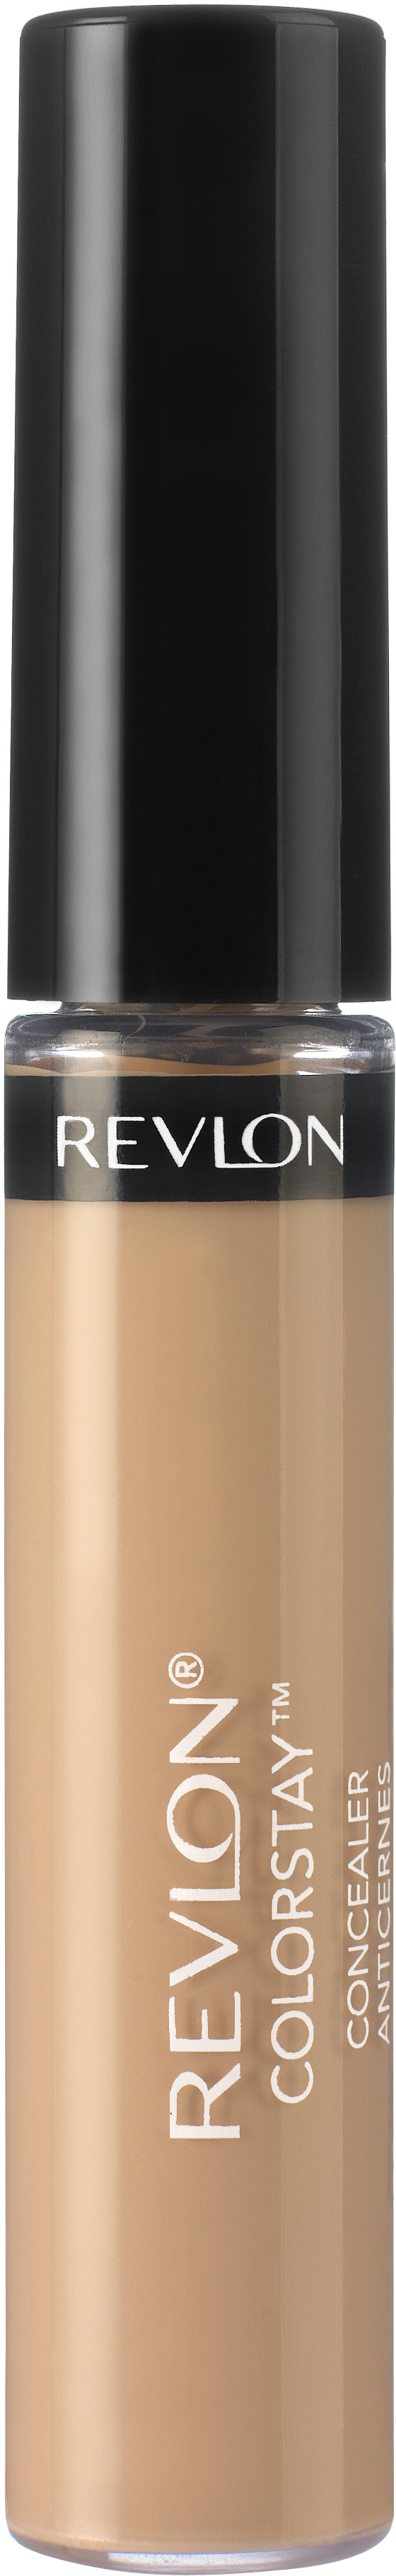 Revlon Cosmetics Colorstay Concealer 020 Light